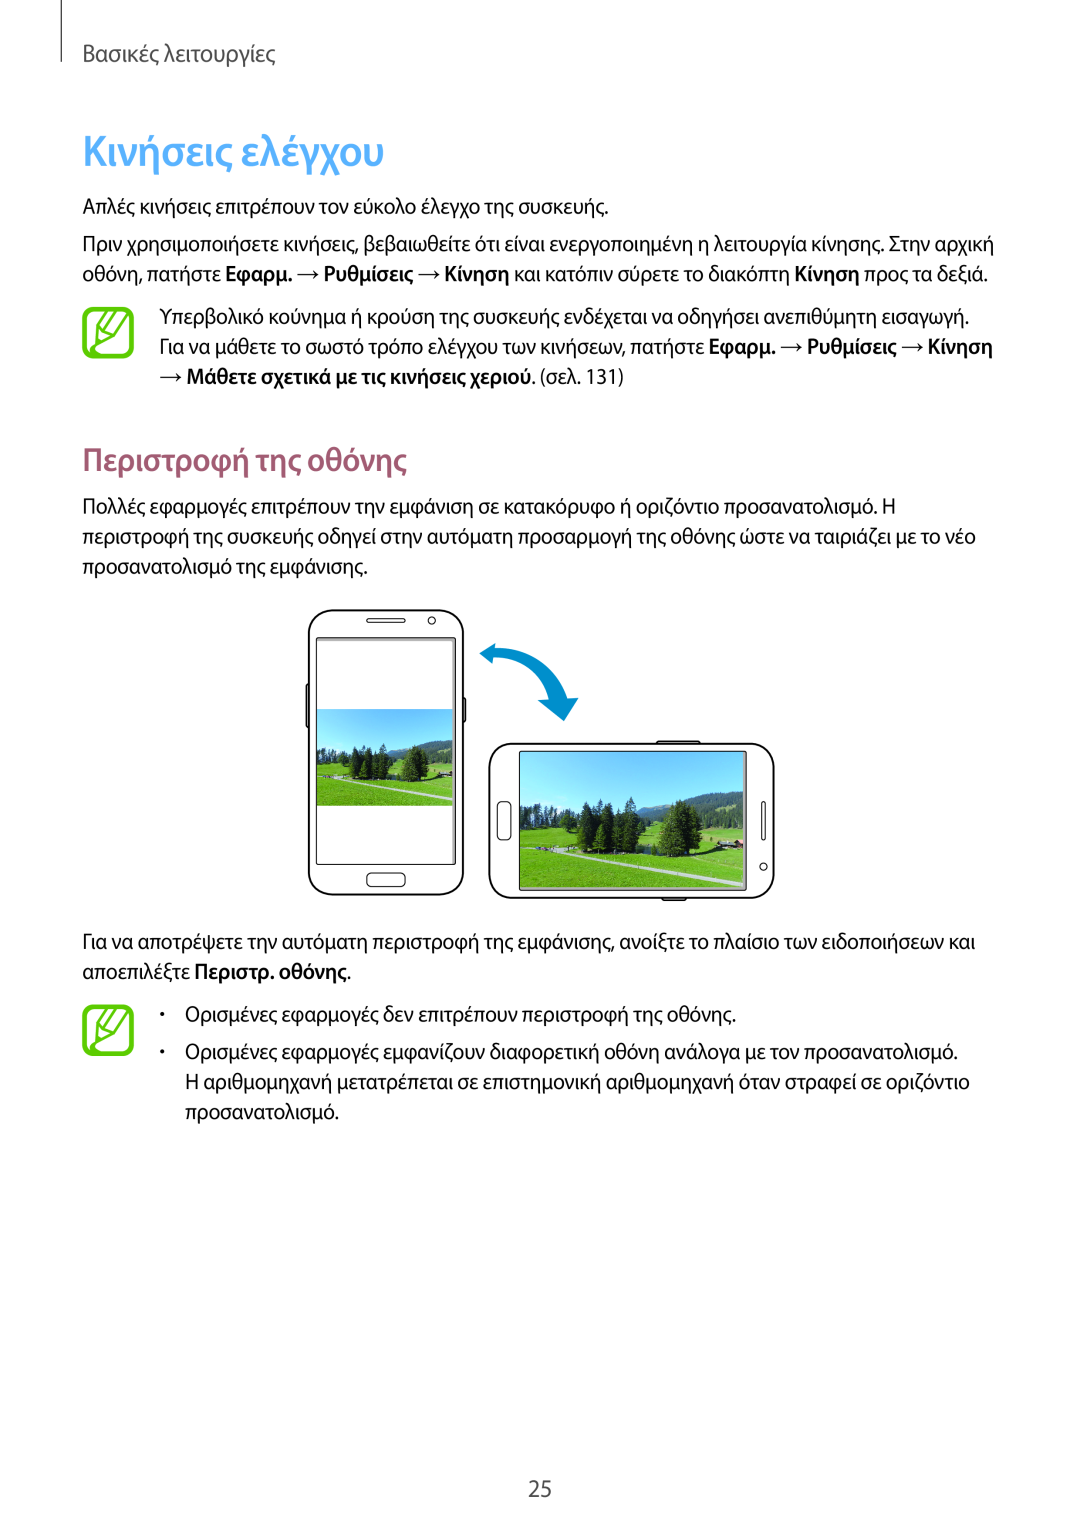 Samsung GT-N7100TAXEUR manual Κινήσεις ελέγχου, Περιστροφή της οθόνης, → Μάθετε σχετικά με τις κινήσεις χεριού. σελ 